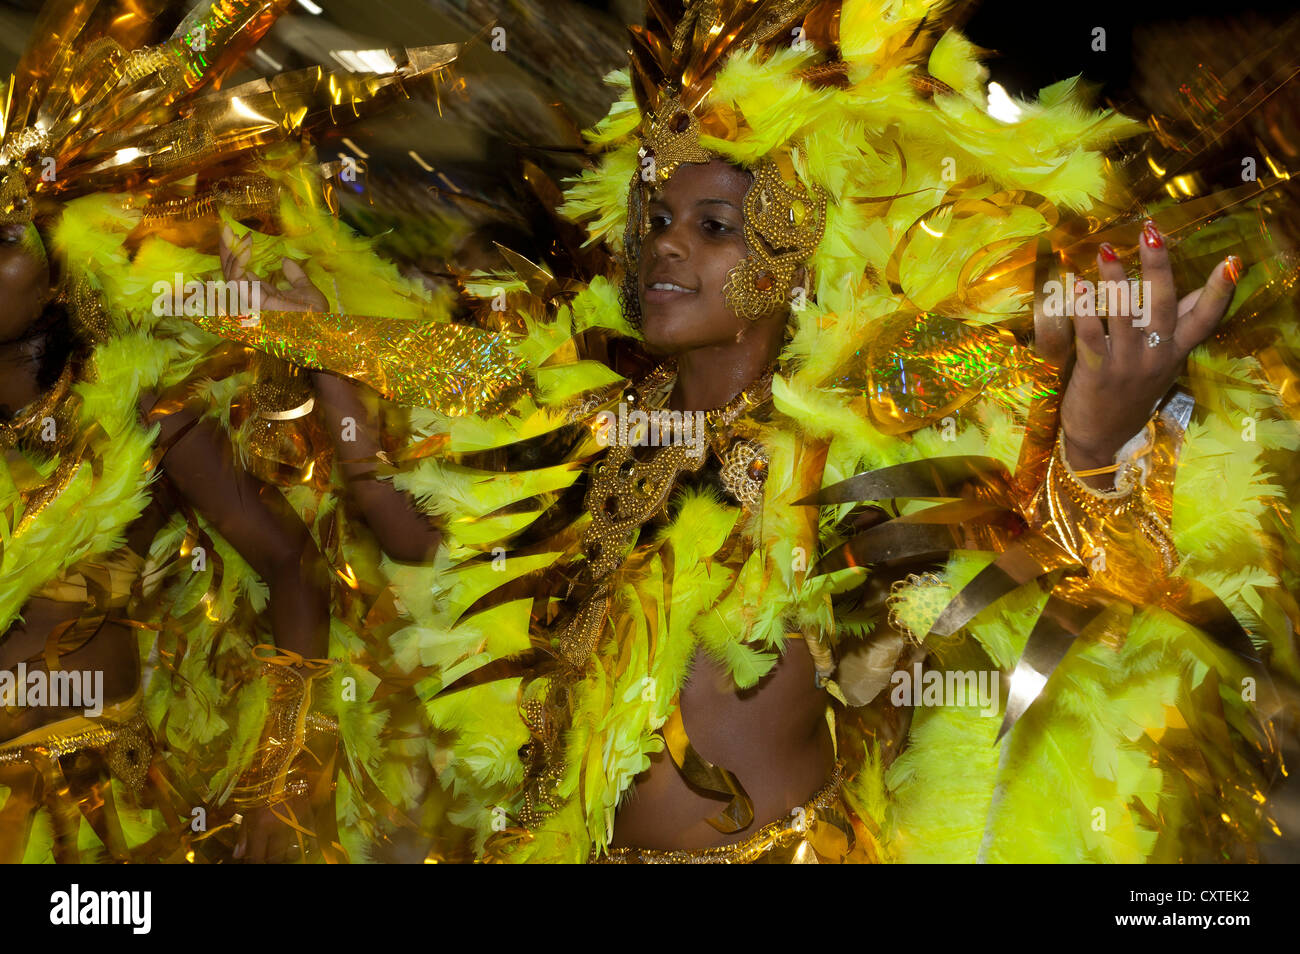 Woman in Yellow Costume During Carnival Parade Rio de Janeiro Brazil Stock Photo